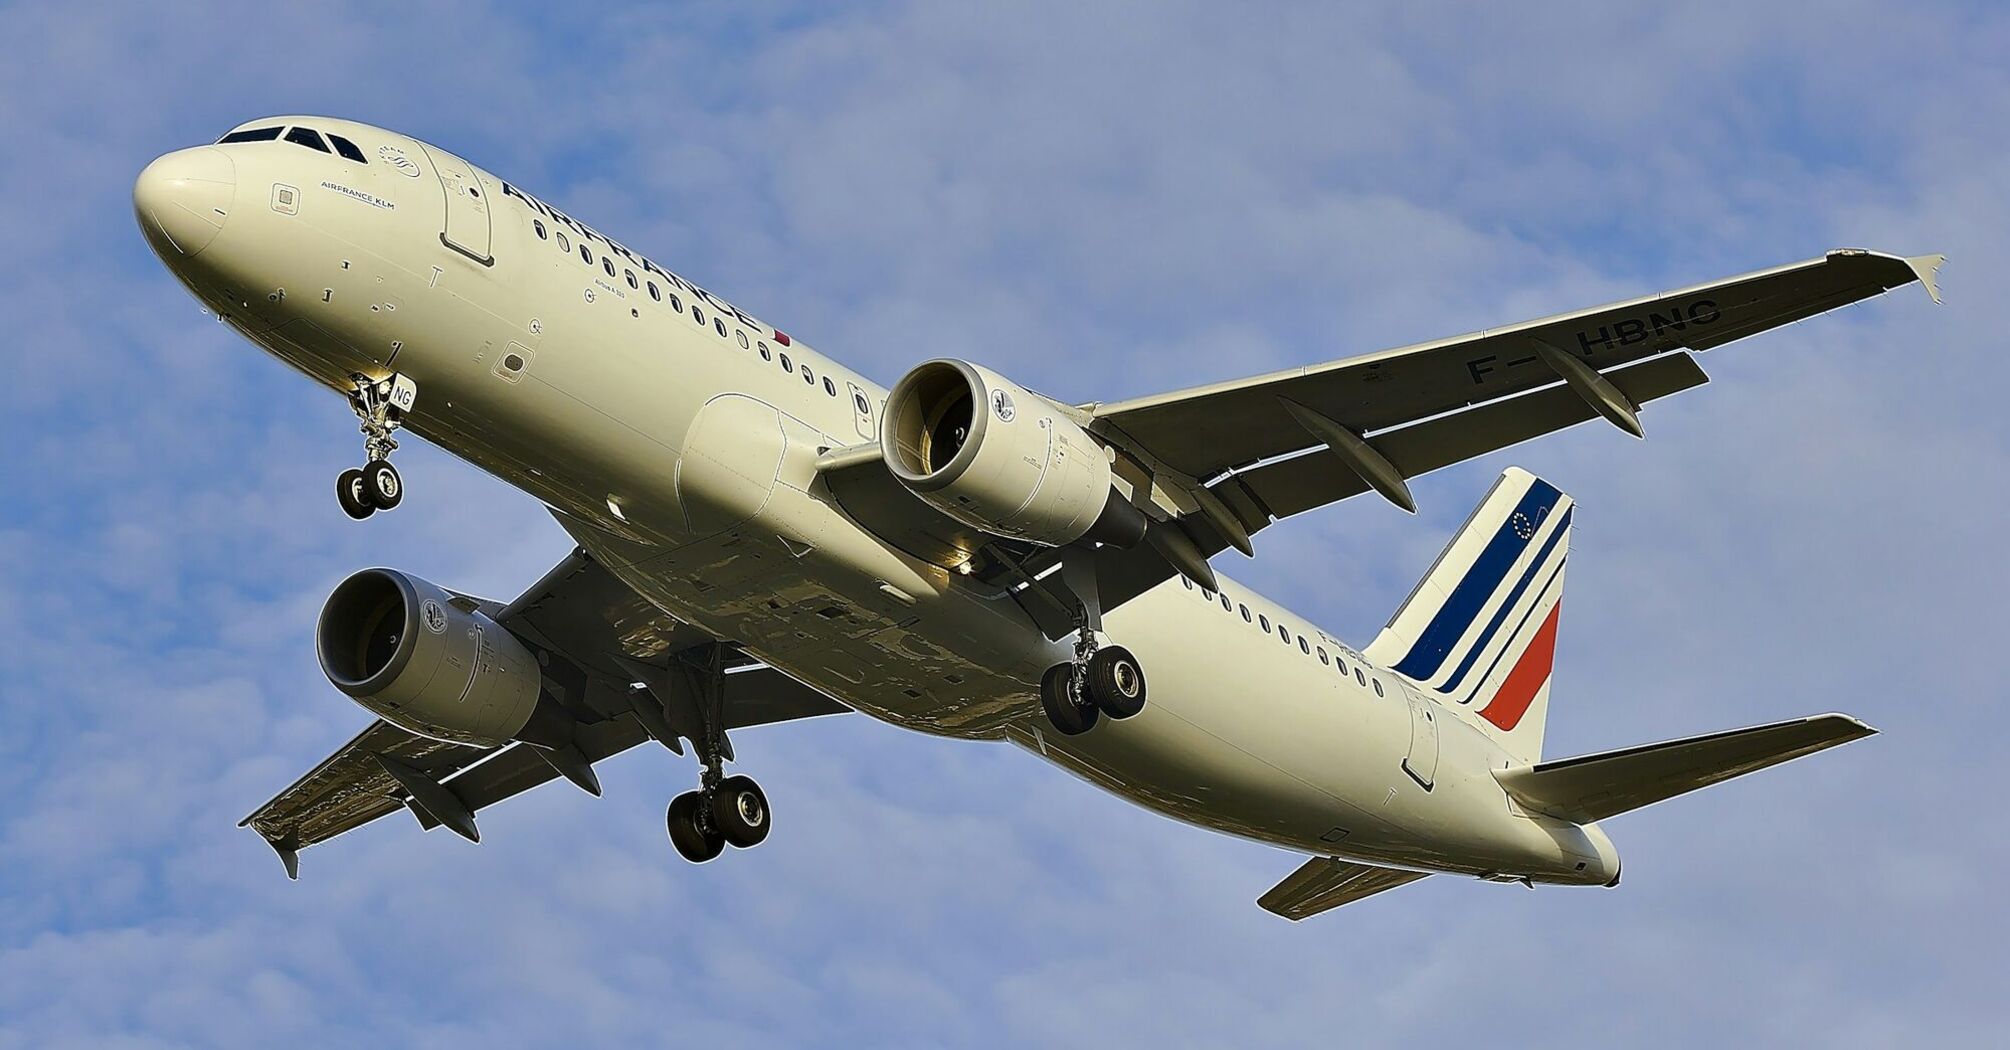 Air France airplane in flight